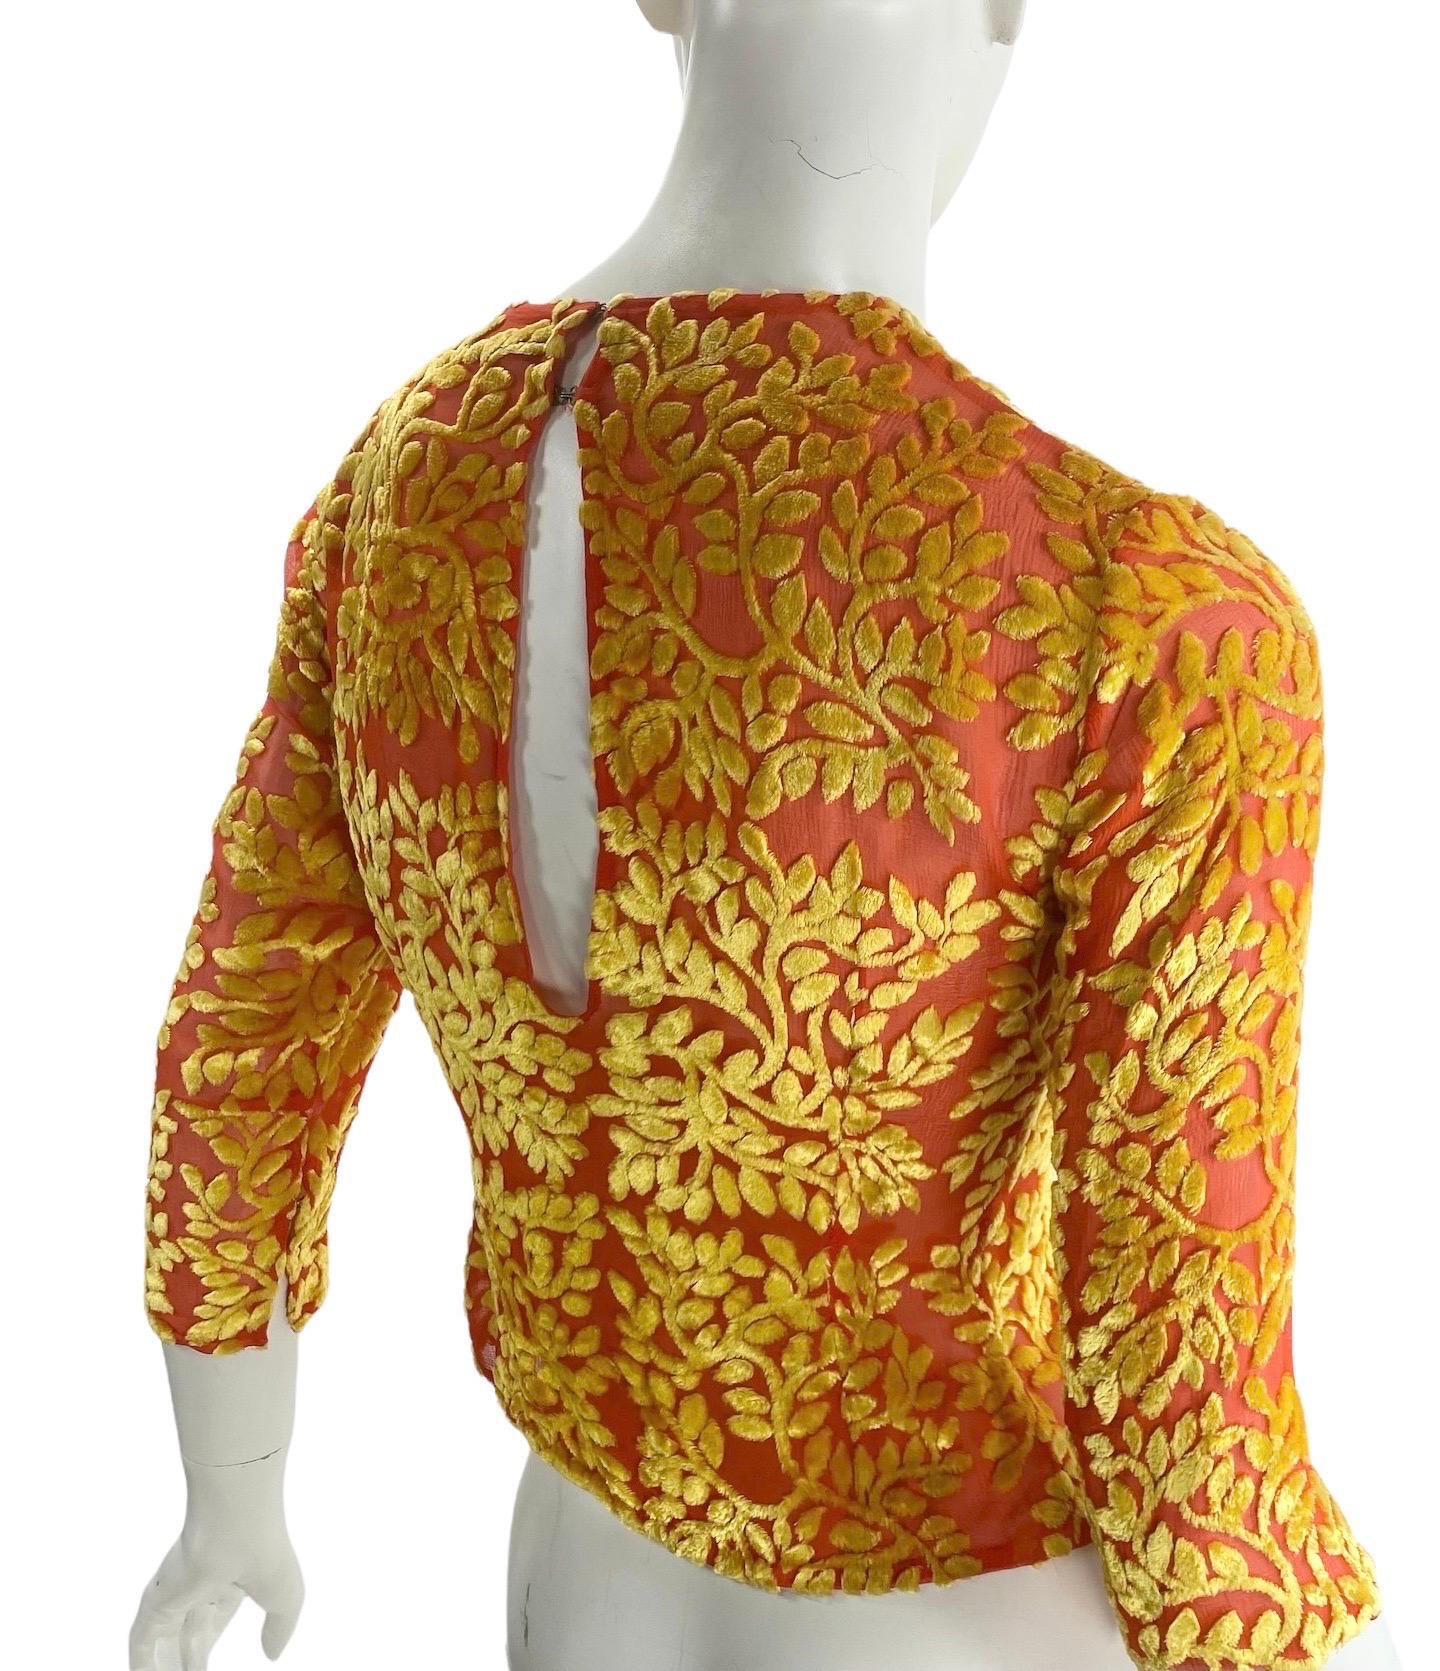 S/S 1997 Vintage Gianni Versace Couture Floral Devore Velvet Shirt For Sale 1